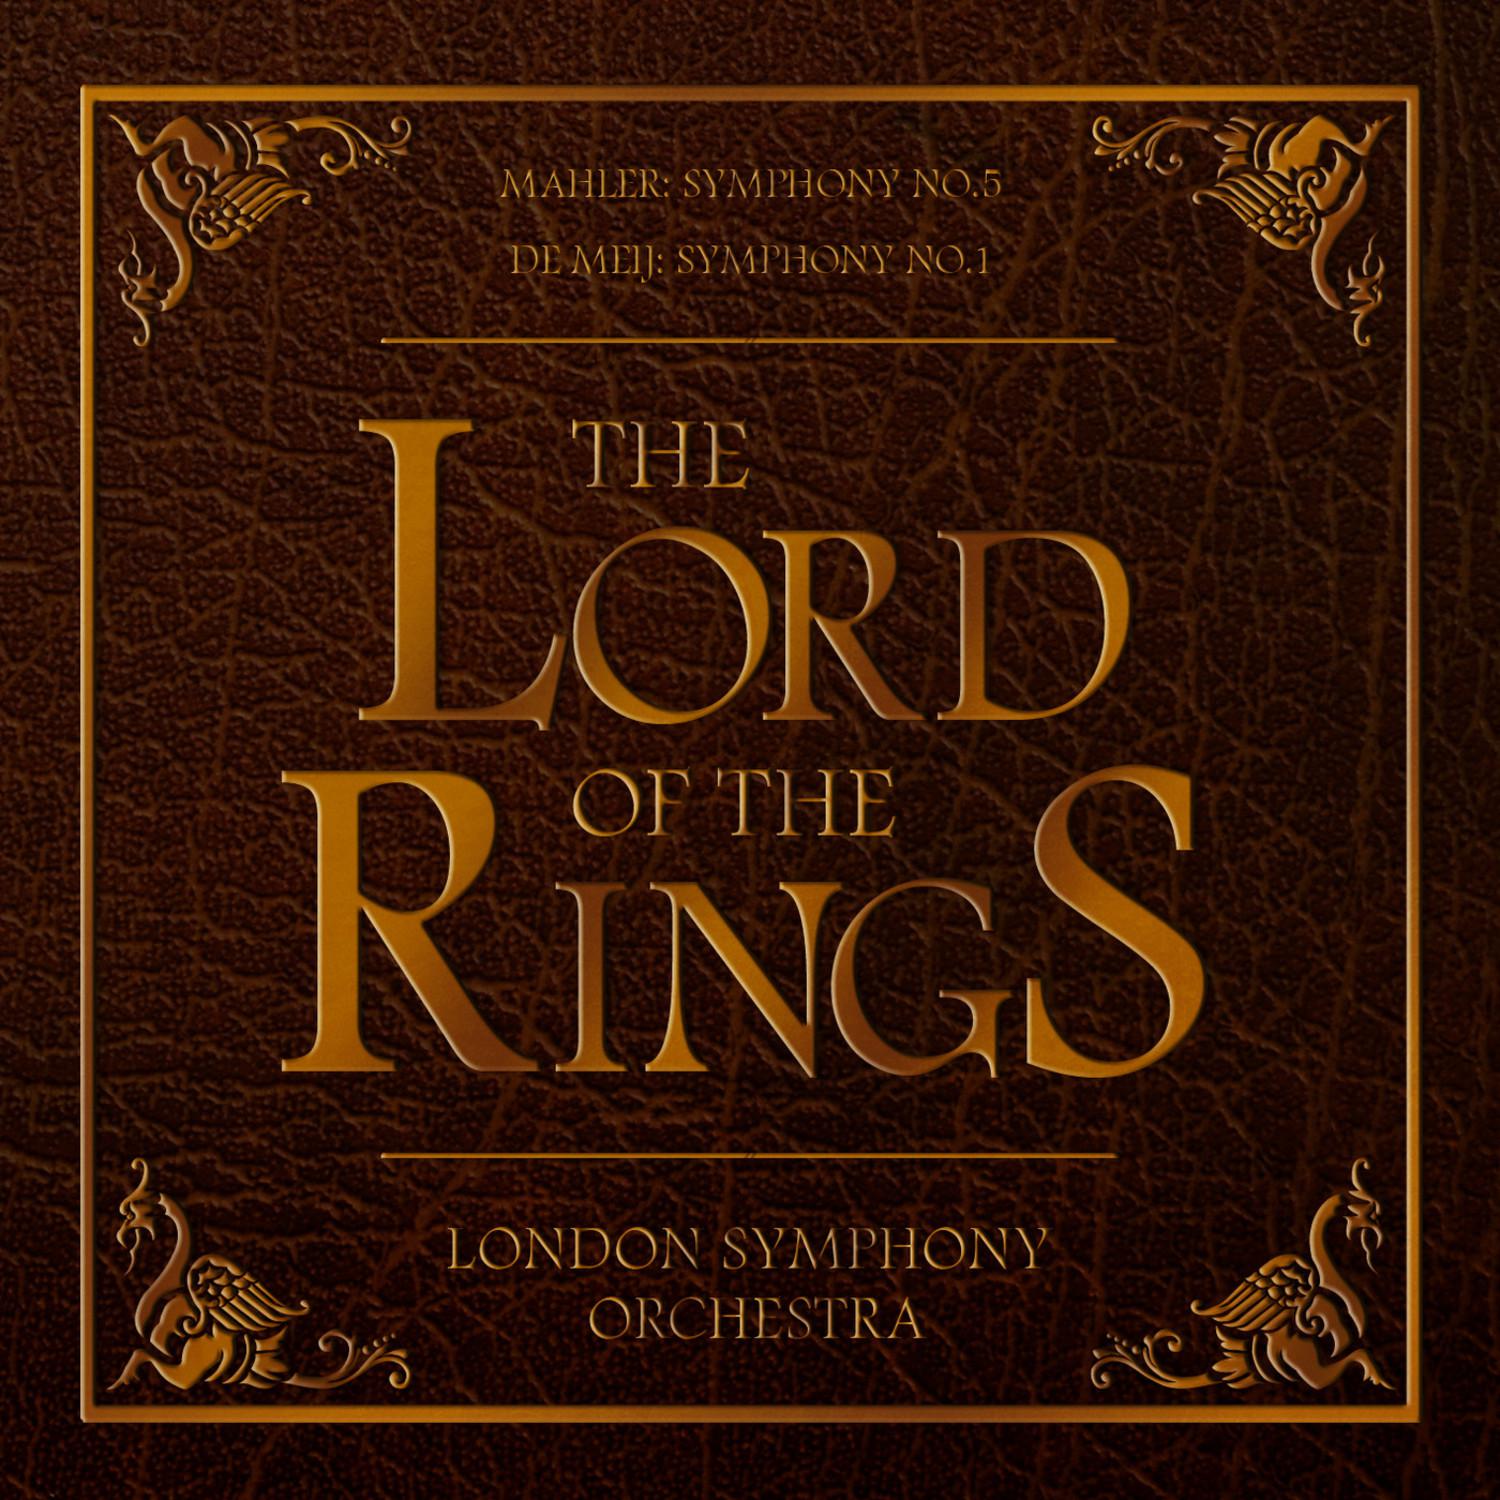 de Meij: Symphony No. 1 "The Lord of the Rings" - Mahler: Symphony No. 5